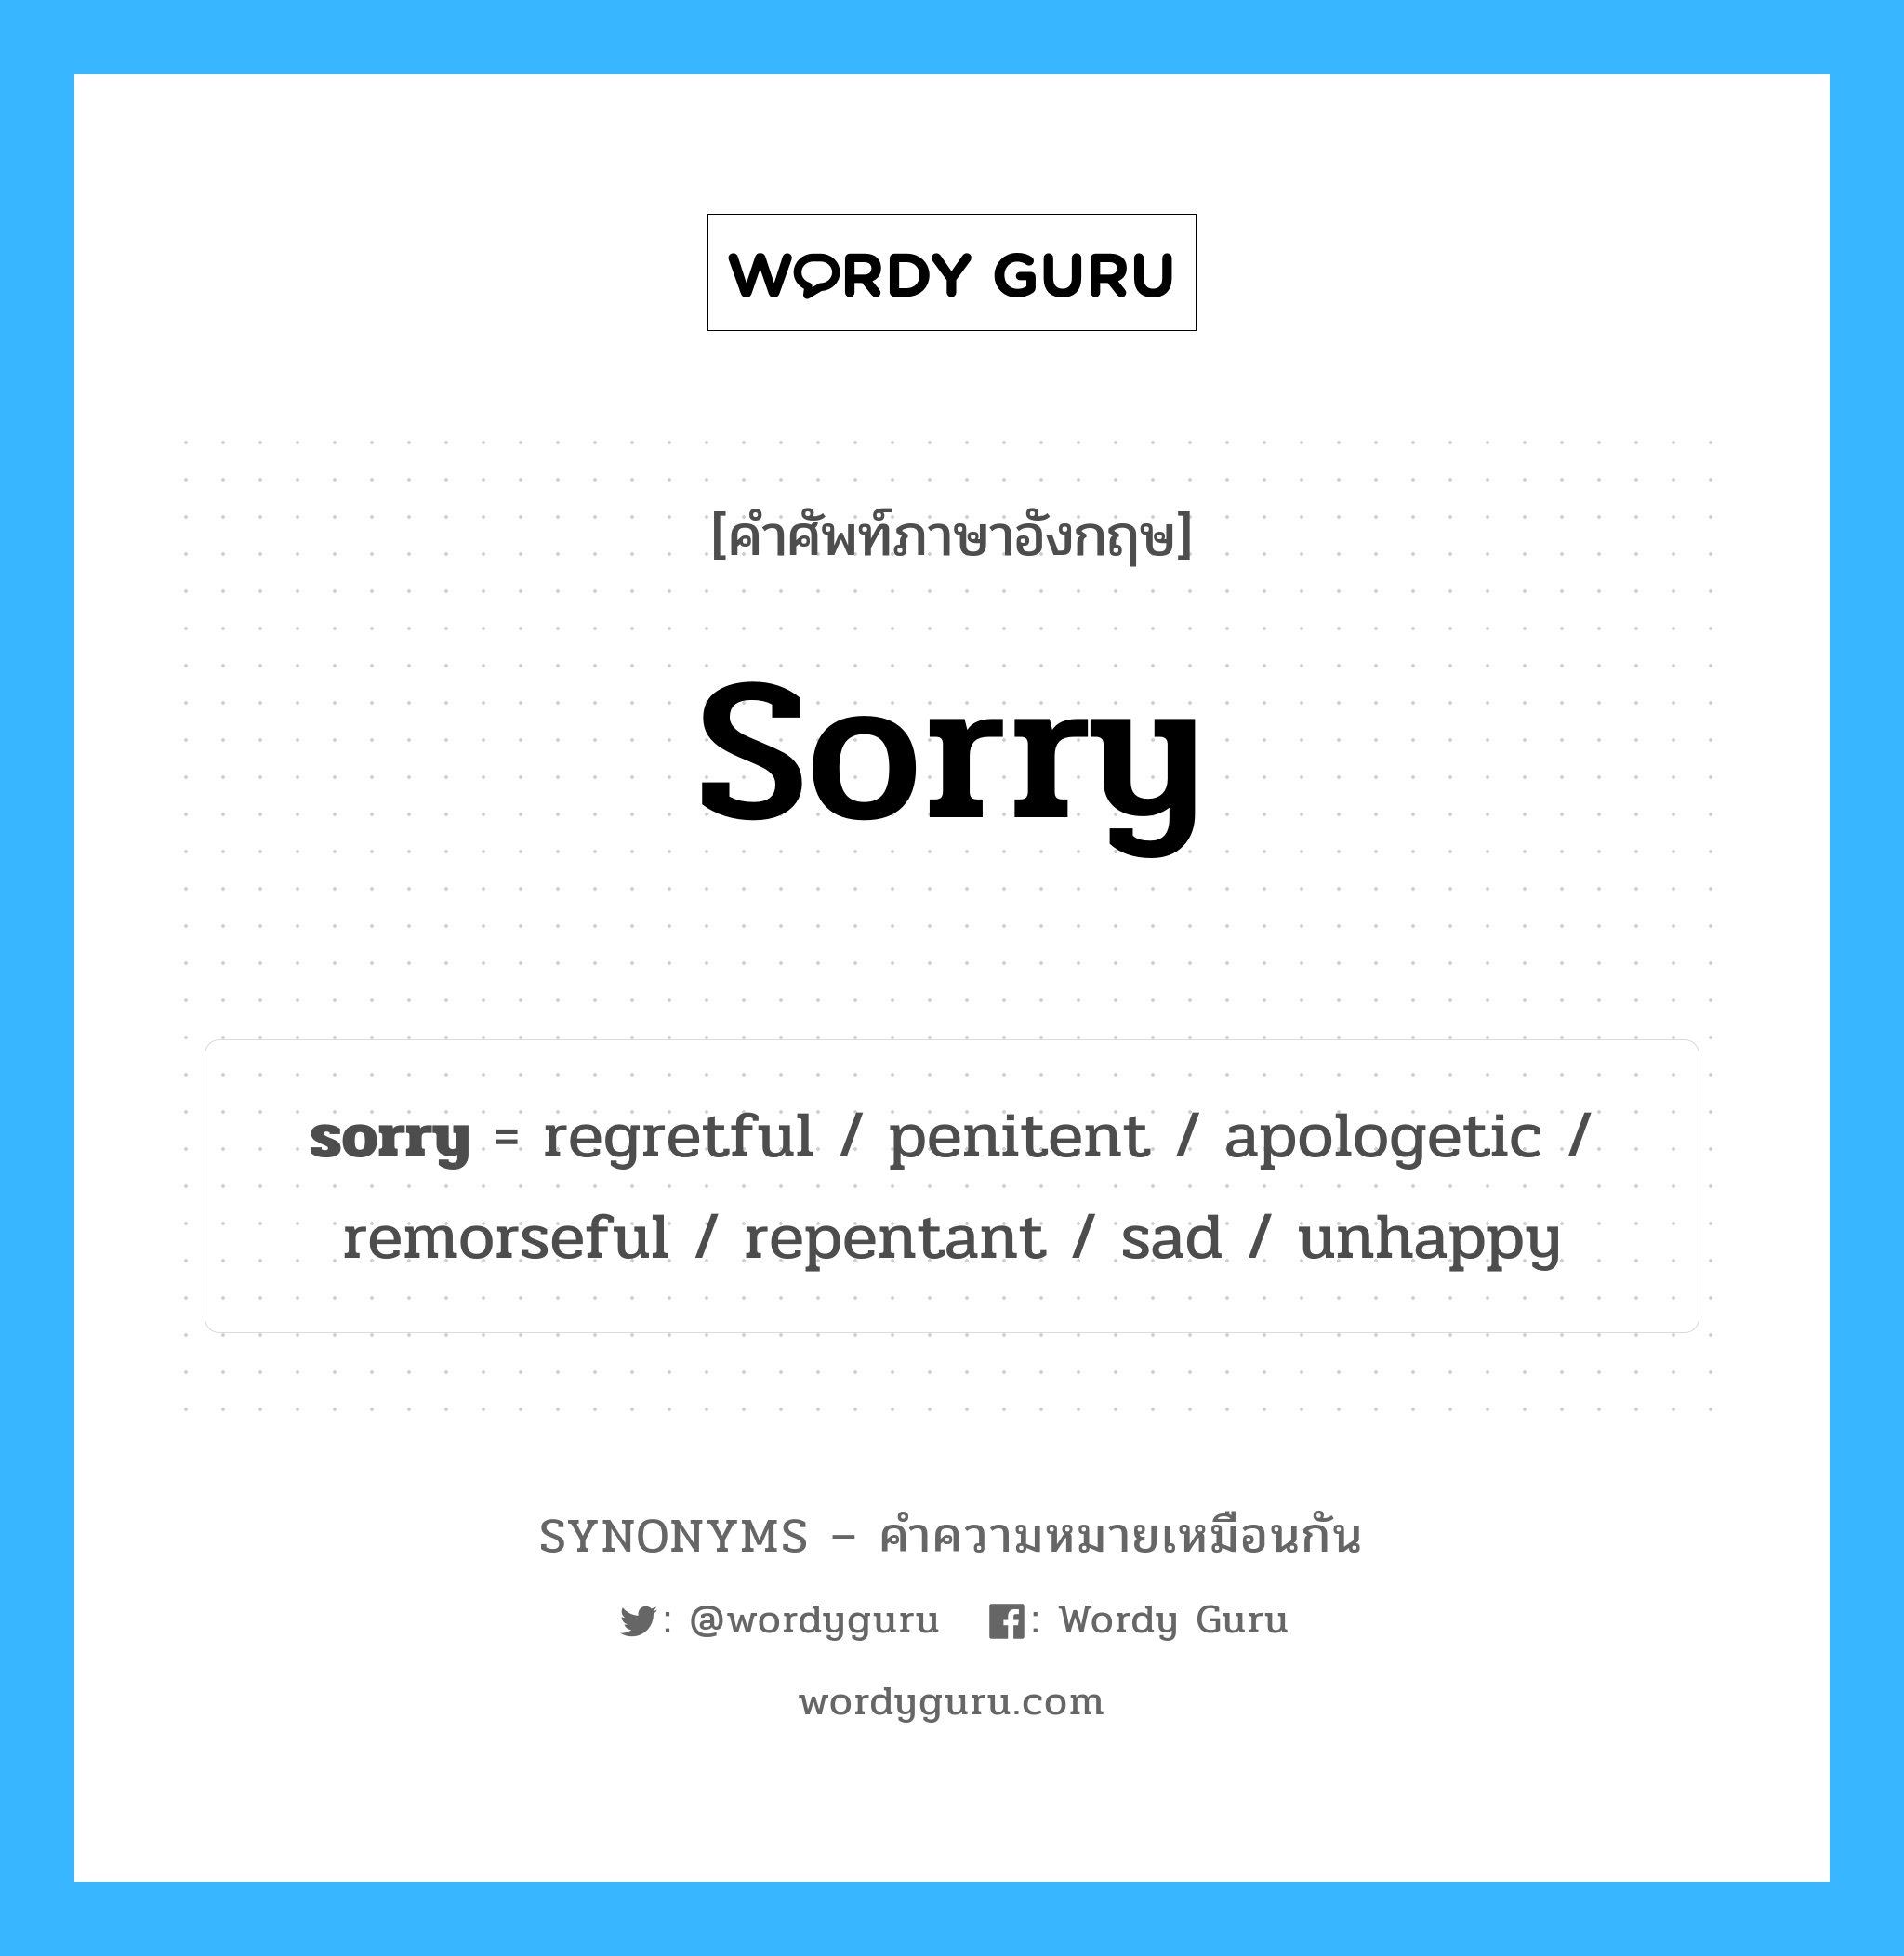 apologetic เป็นหนึ่งใน sorry และมีคำอื่น ๆ อีกดังนี้, คำศัพท์ภาษาอังกฤษ apologetic ความหมายคล้ายกันกับ sorry แปลว่า ขออภัย หมวด sorry